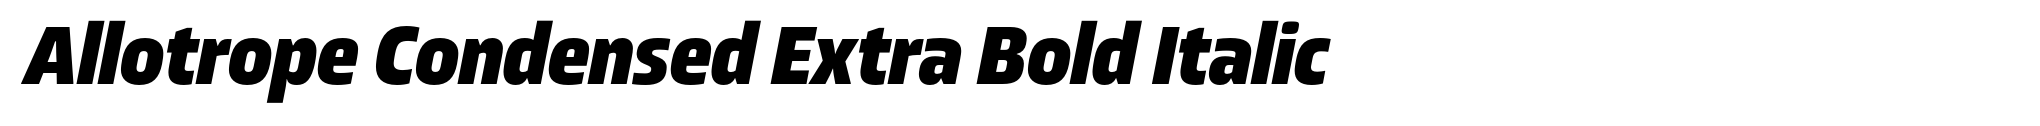 Allotrope Condensed Extra Bold Italic image